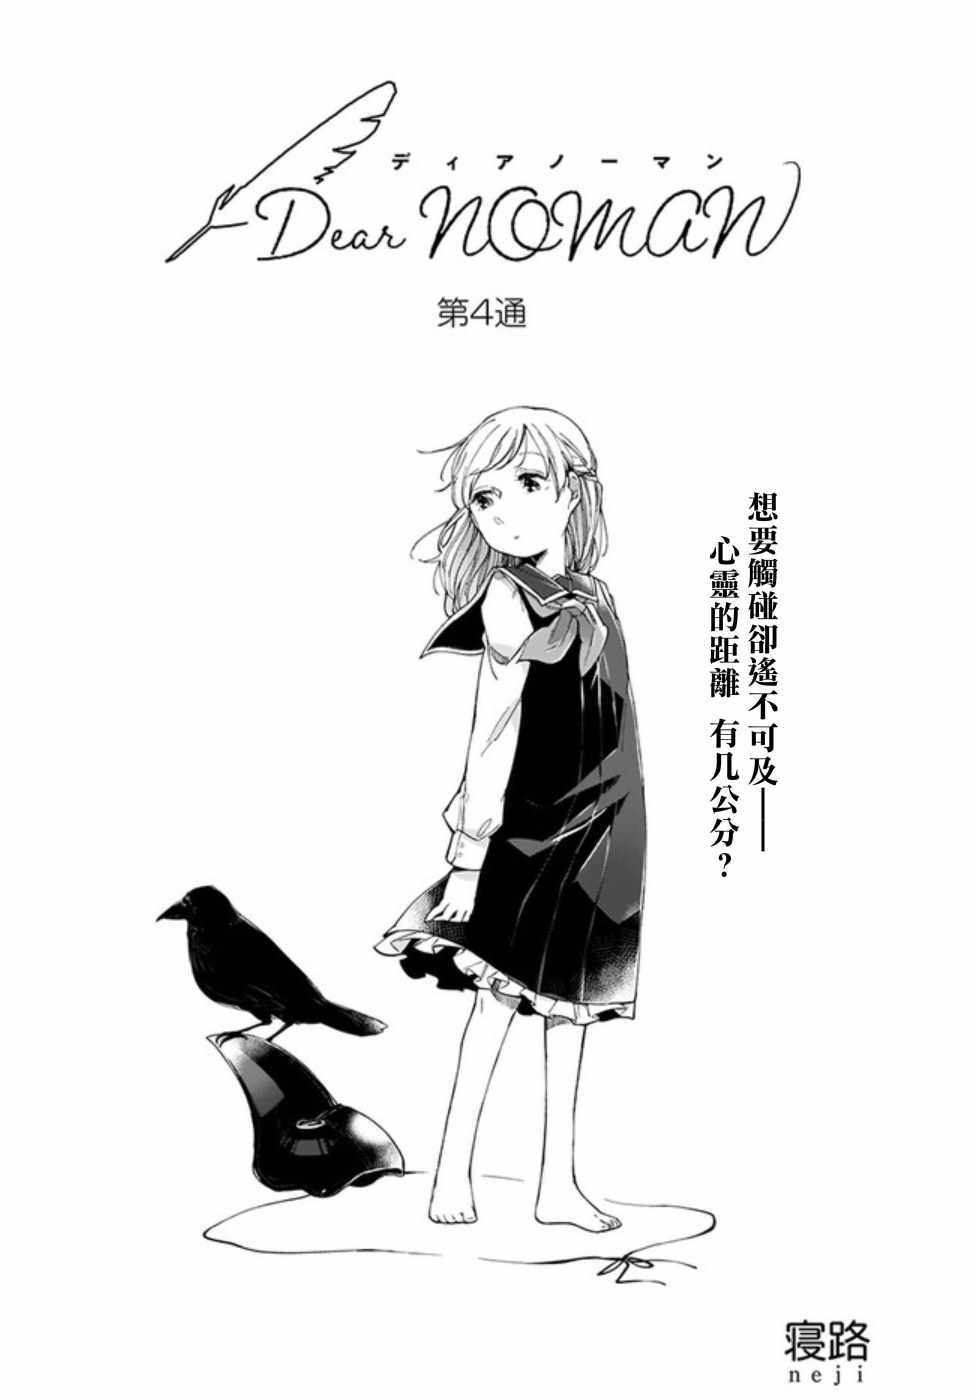 《dear noman》漫画 004集